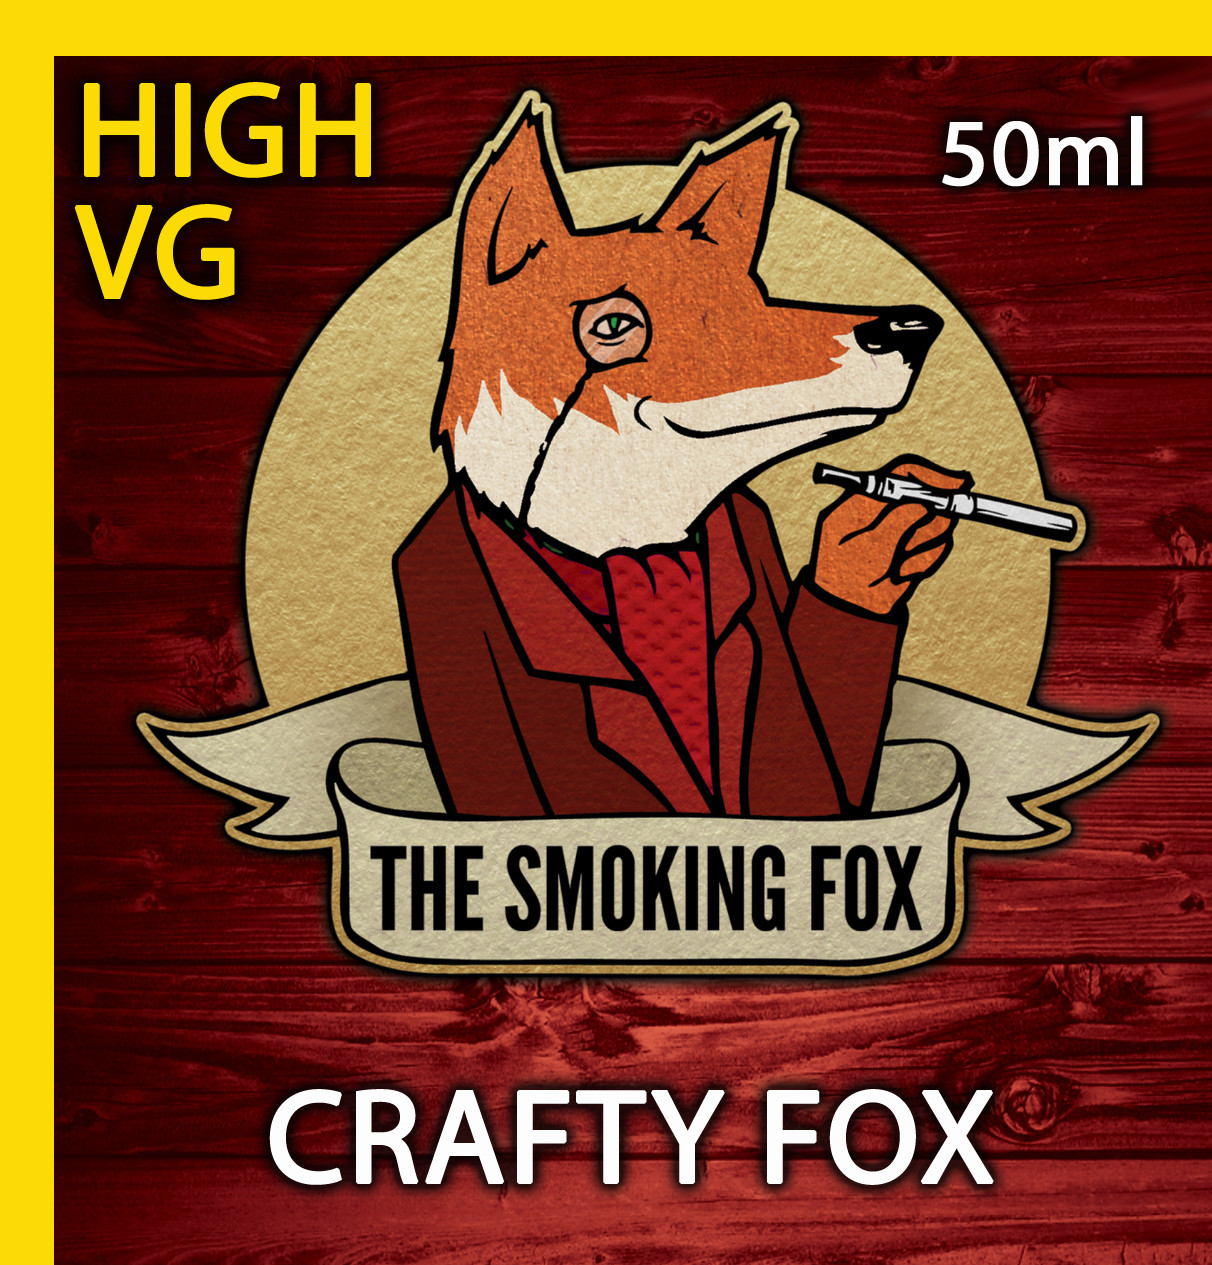 THE SMOKING FOX 50ml HIGH VG - CRAFTY FOX